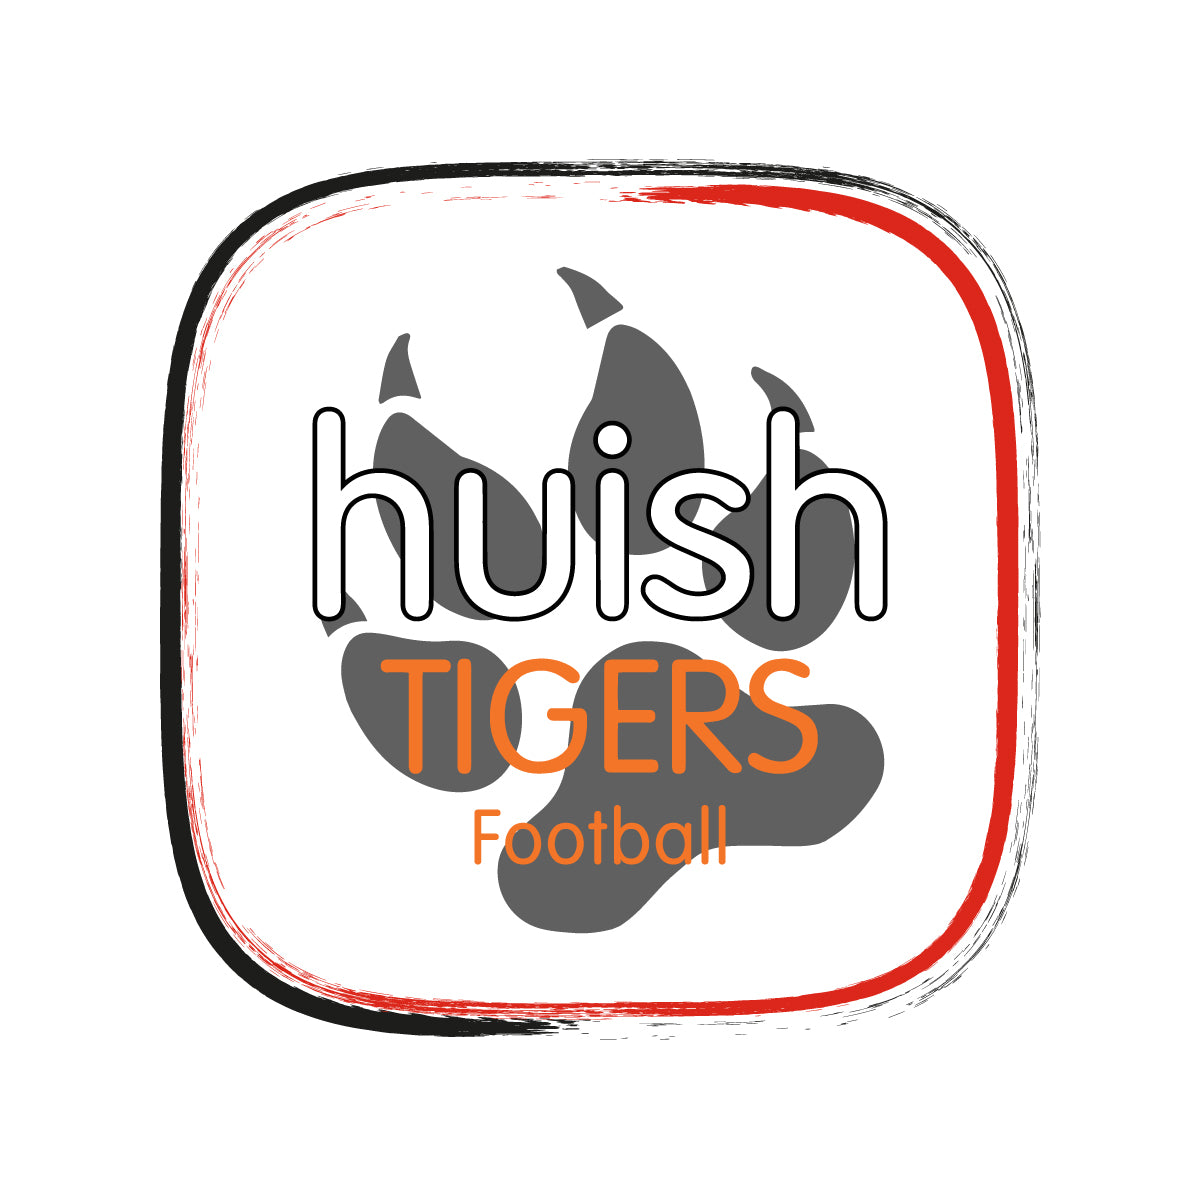 Huish Tigers Football